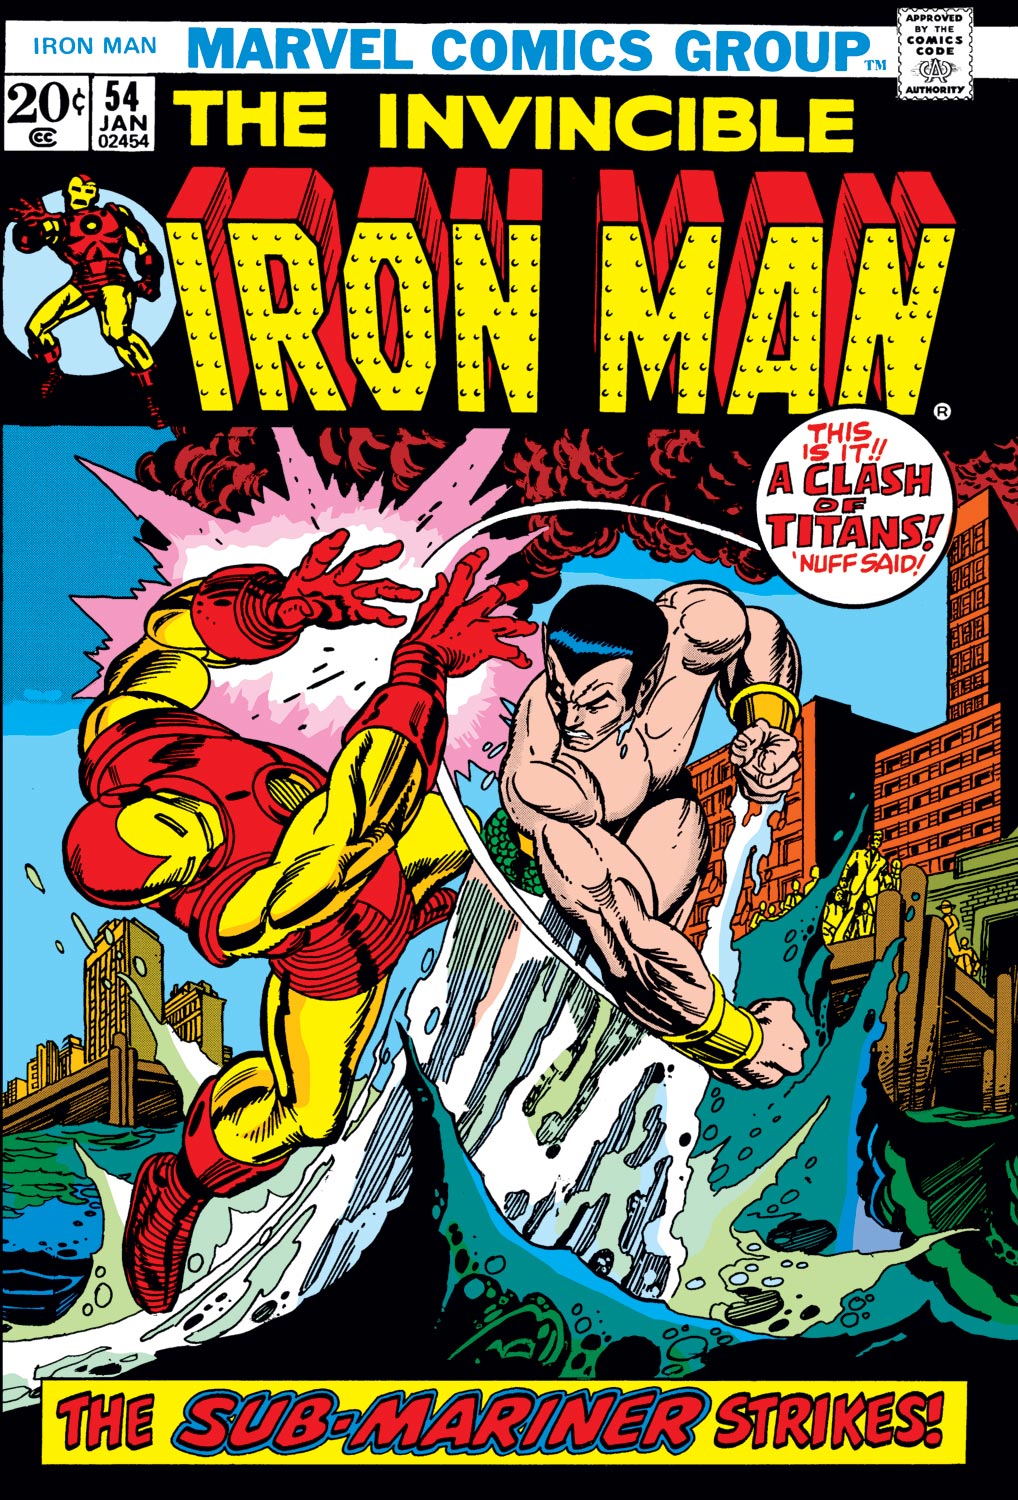 Iron Man (1968) #54